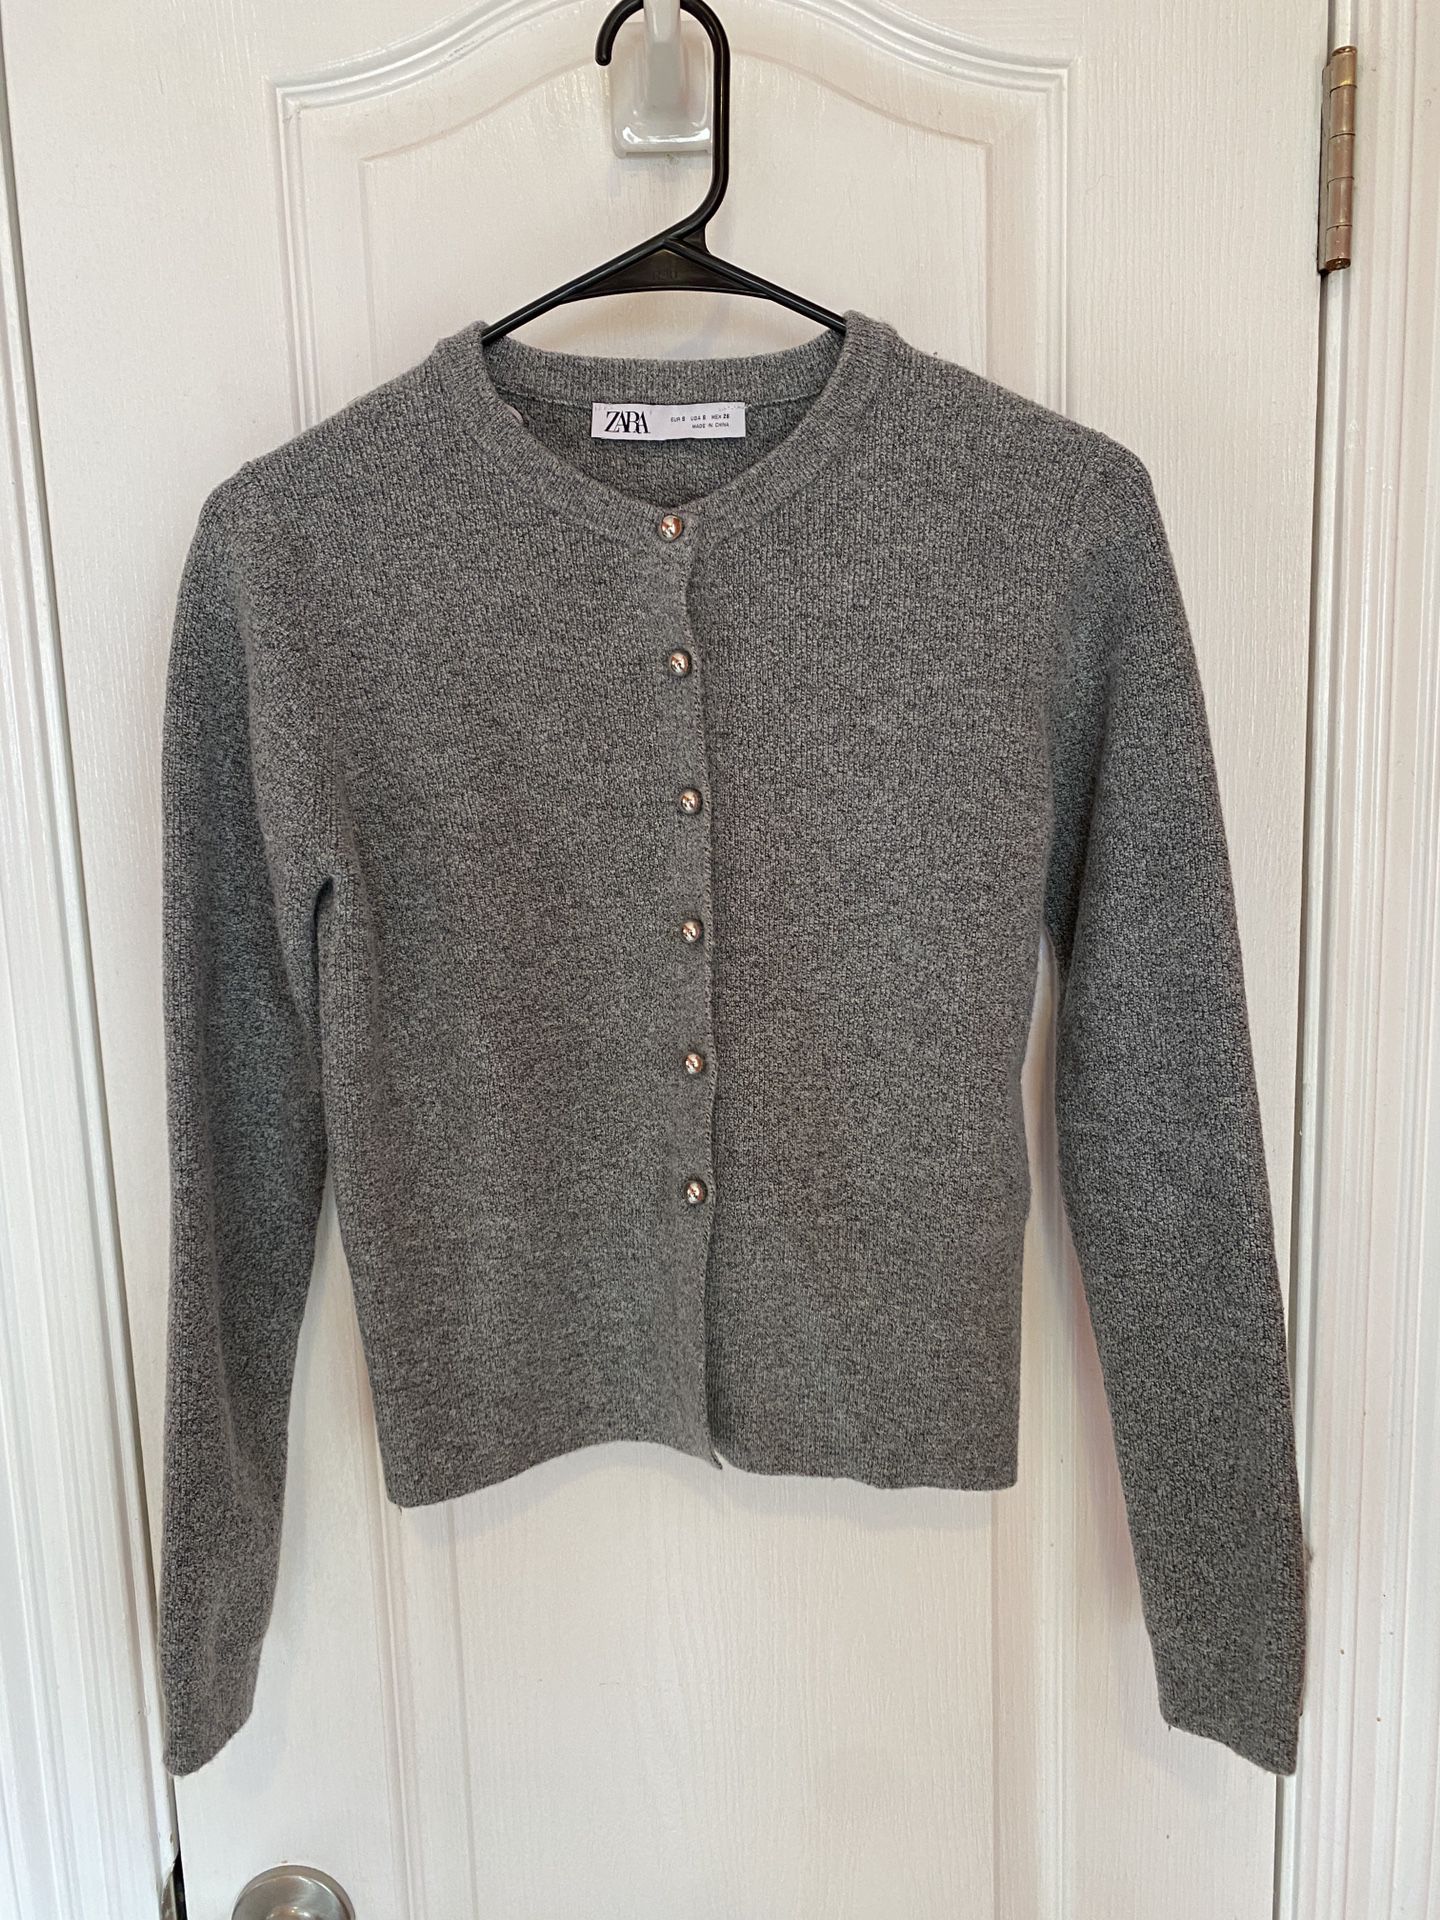 Zara Cardigan Sweater